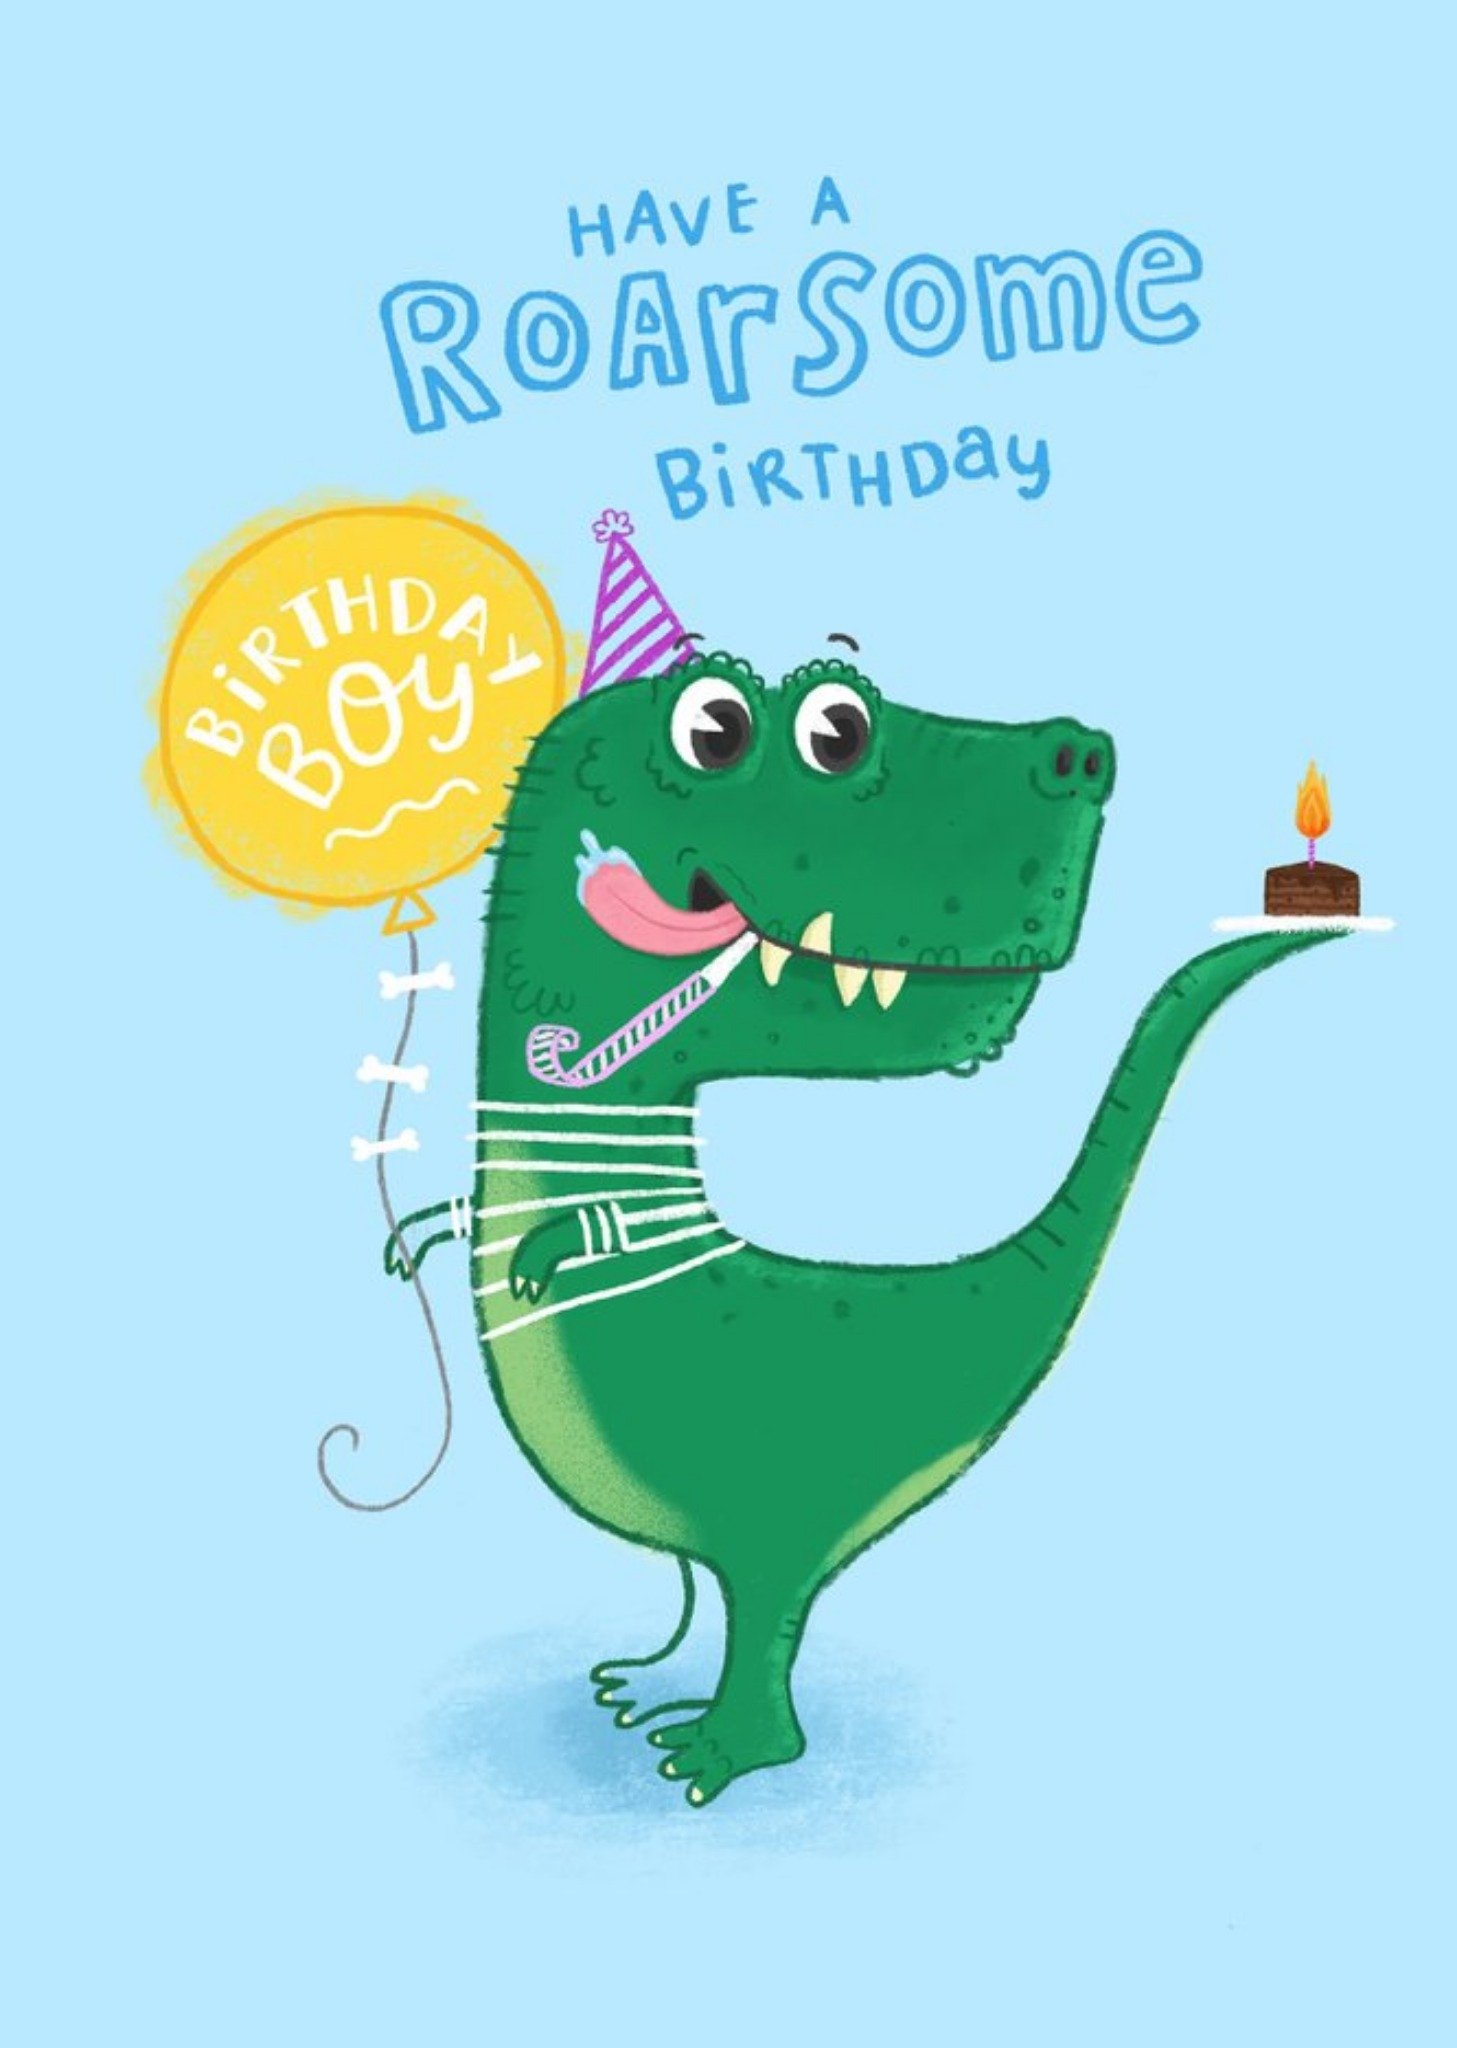 Friends Blue Kiwi Illustration Dinosaur T Rex Cute Pun Birthday Kids Card, Large